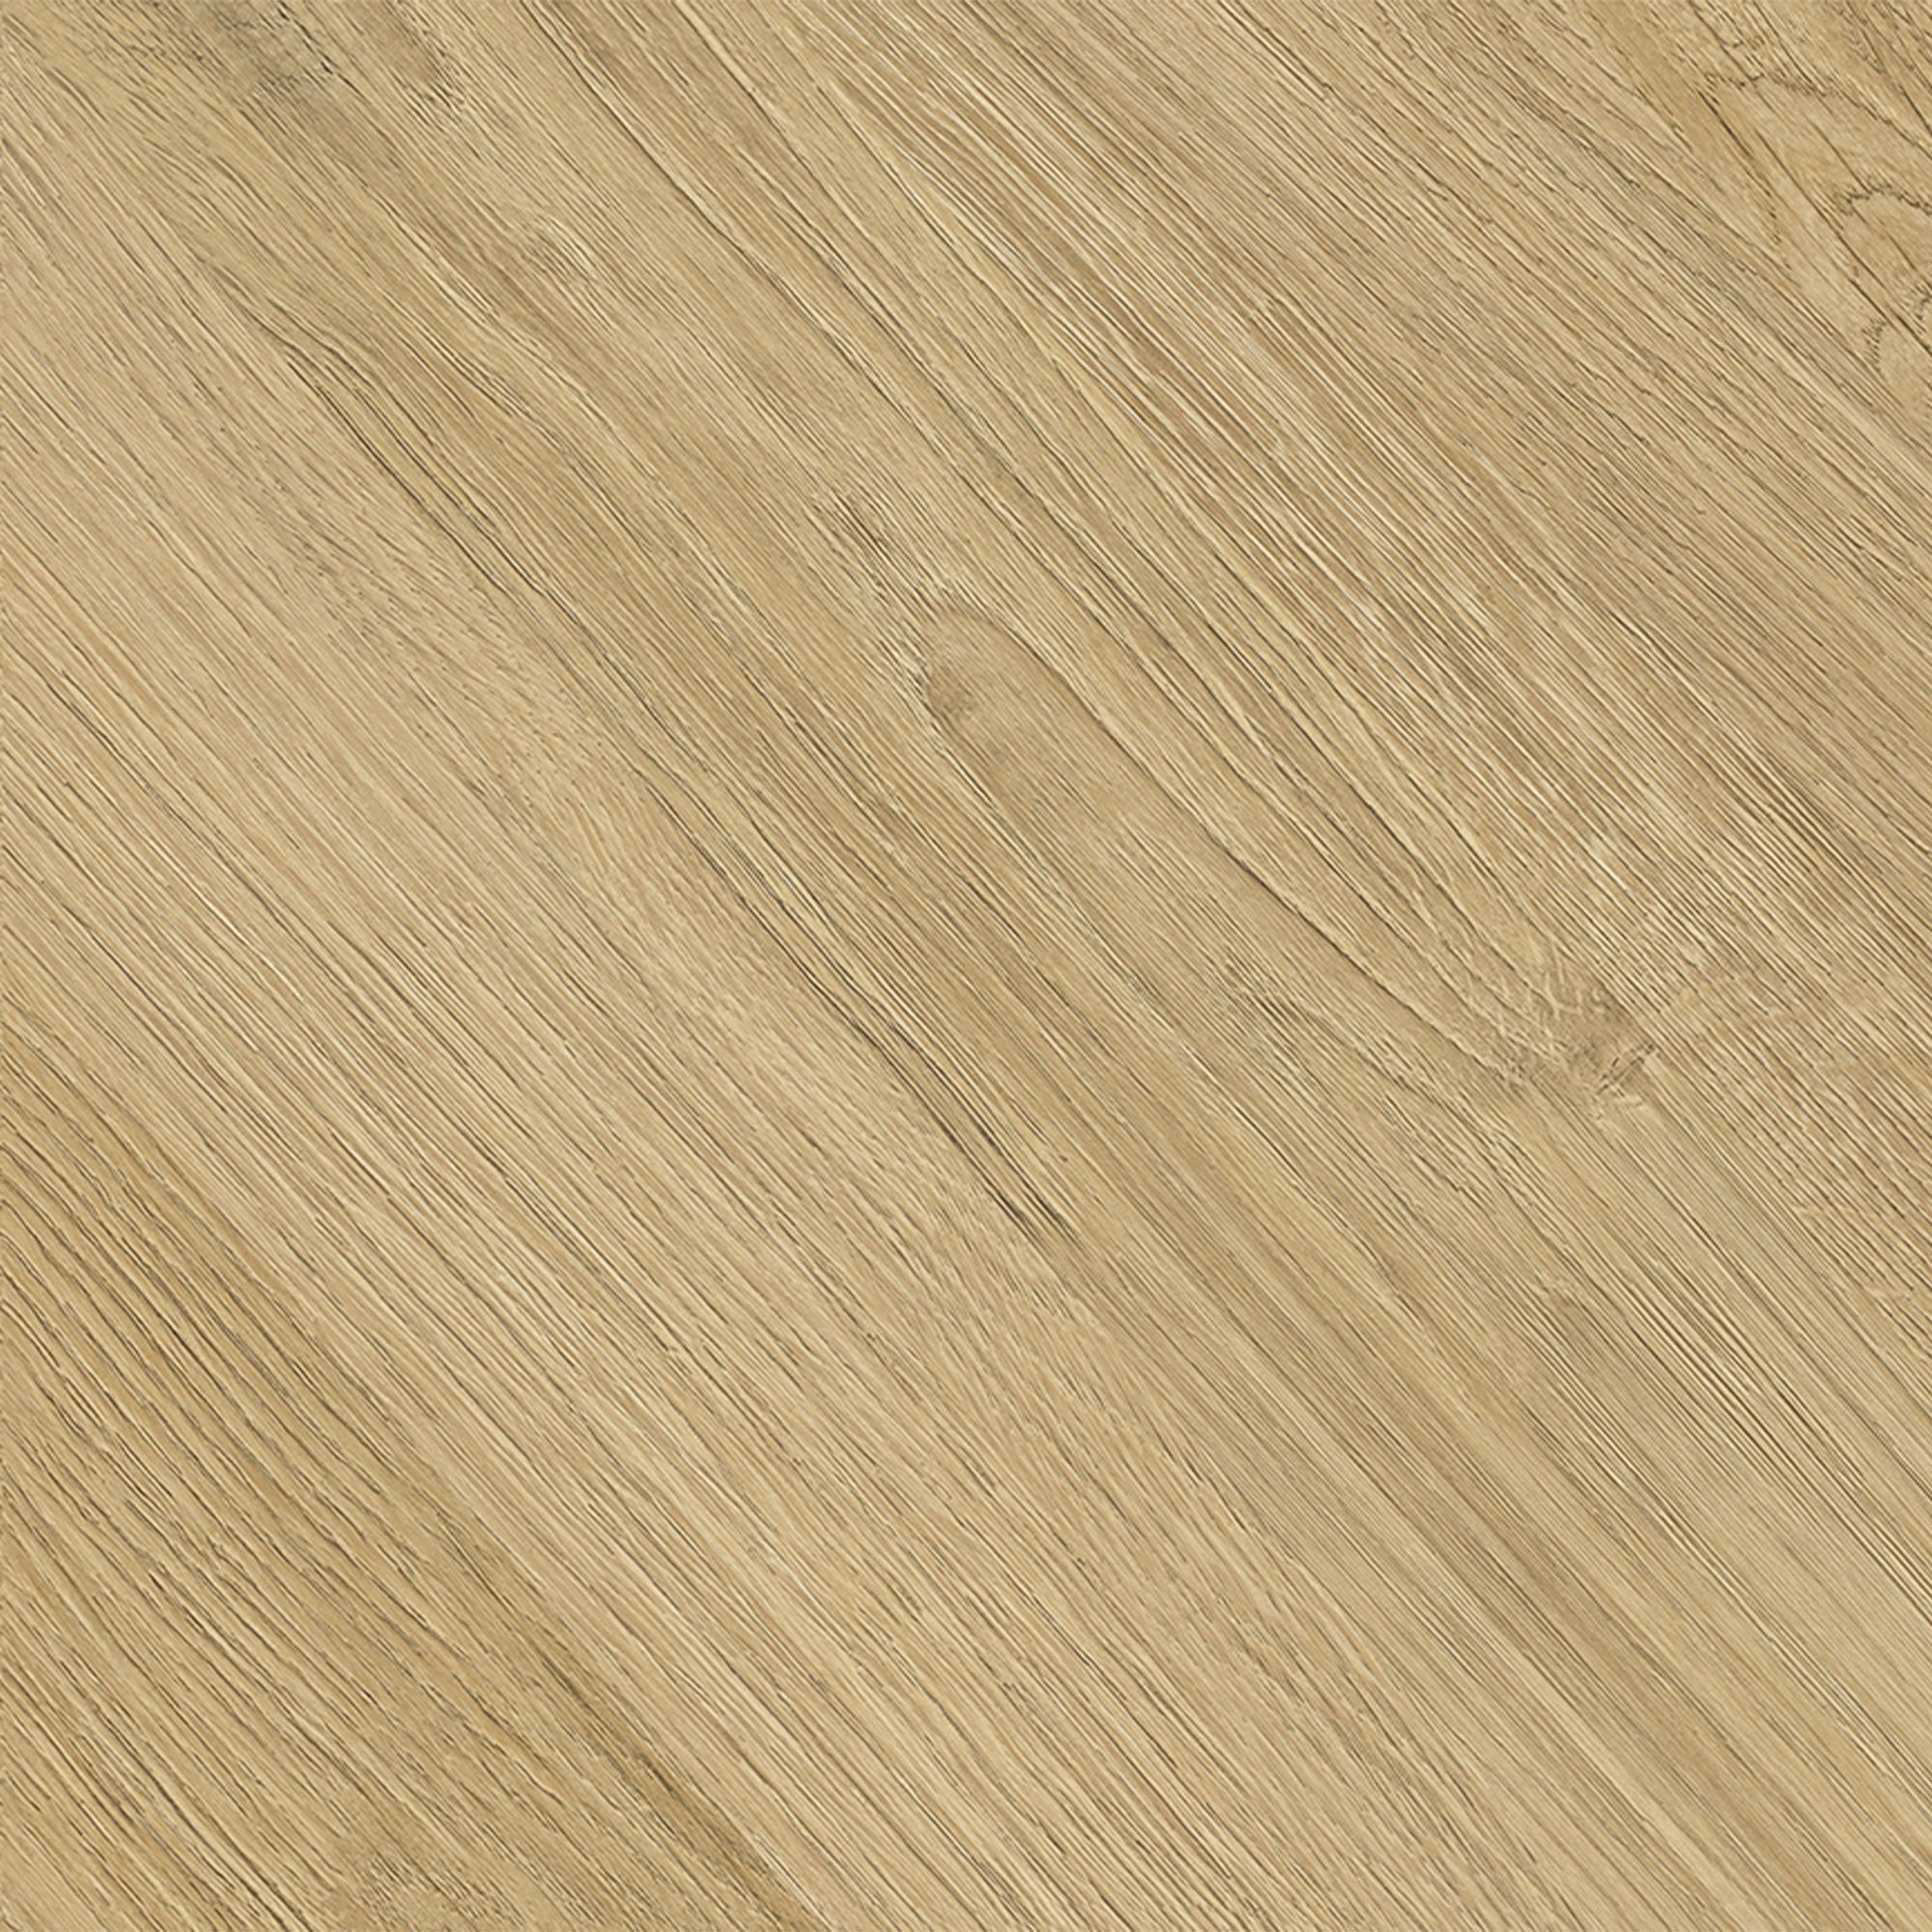 GoodHome Leyton Herringbone Oak effect Laminate flooring Sample